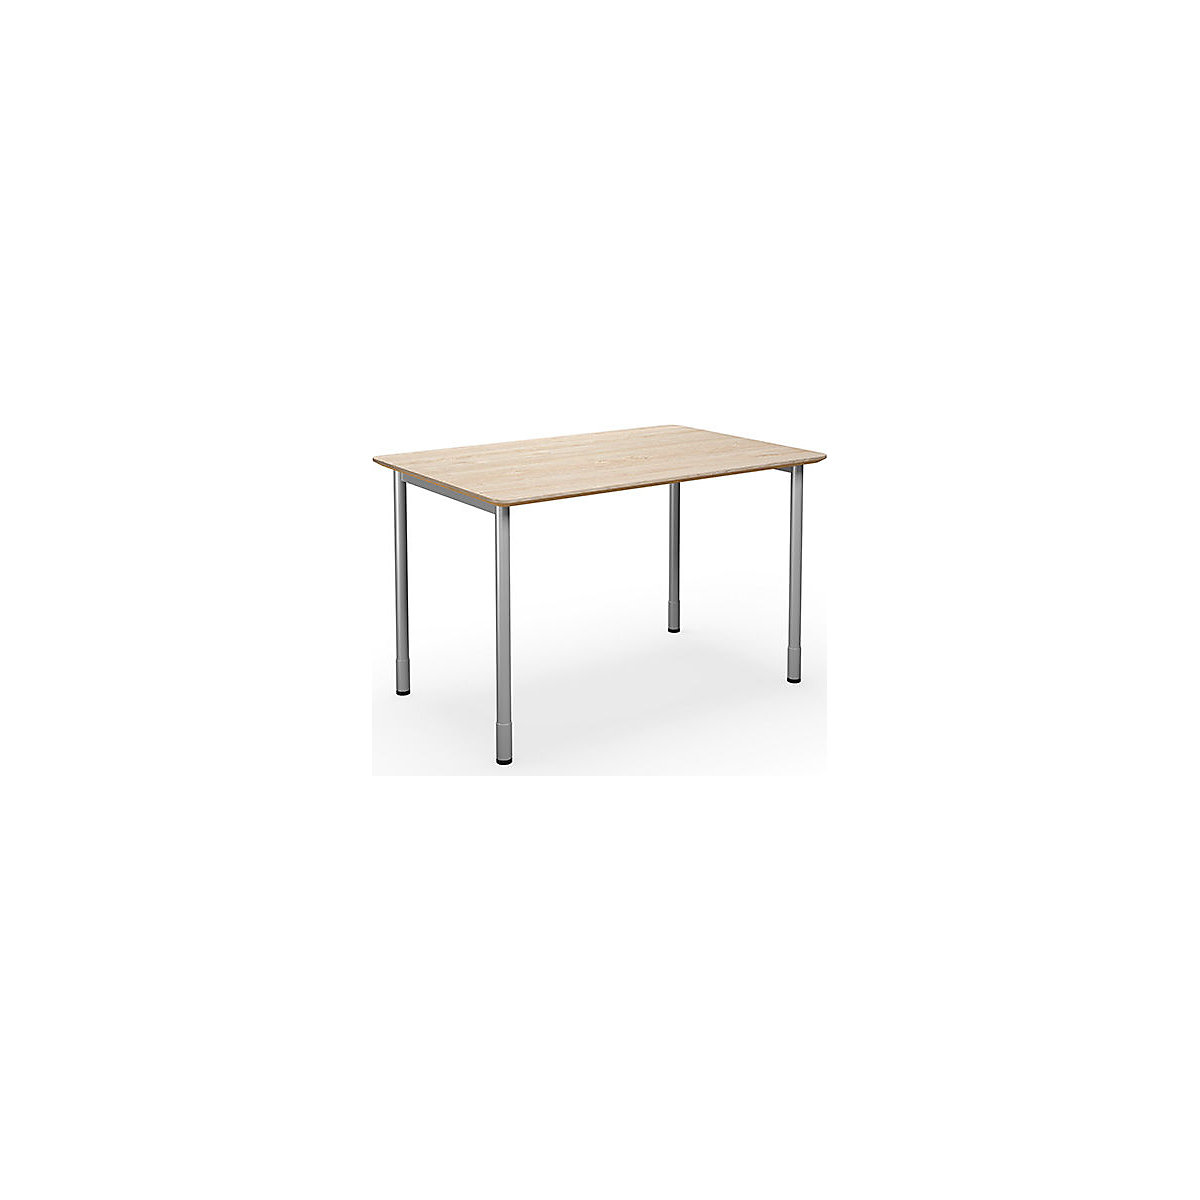 DUO-C Trend multi-purpose desk, straight tabletop, rounded corners, WxD 1200 x 800 mm, oak, silver-2